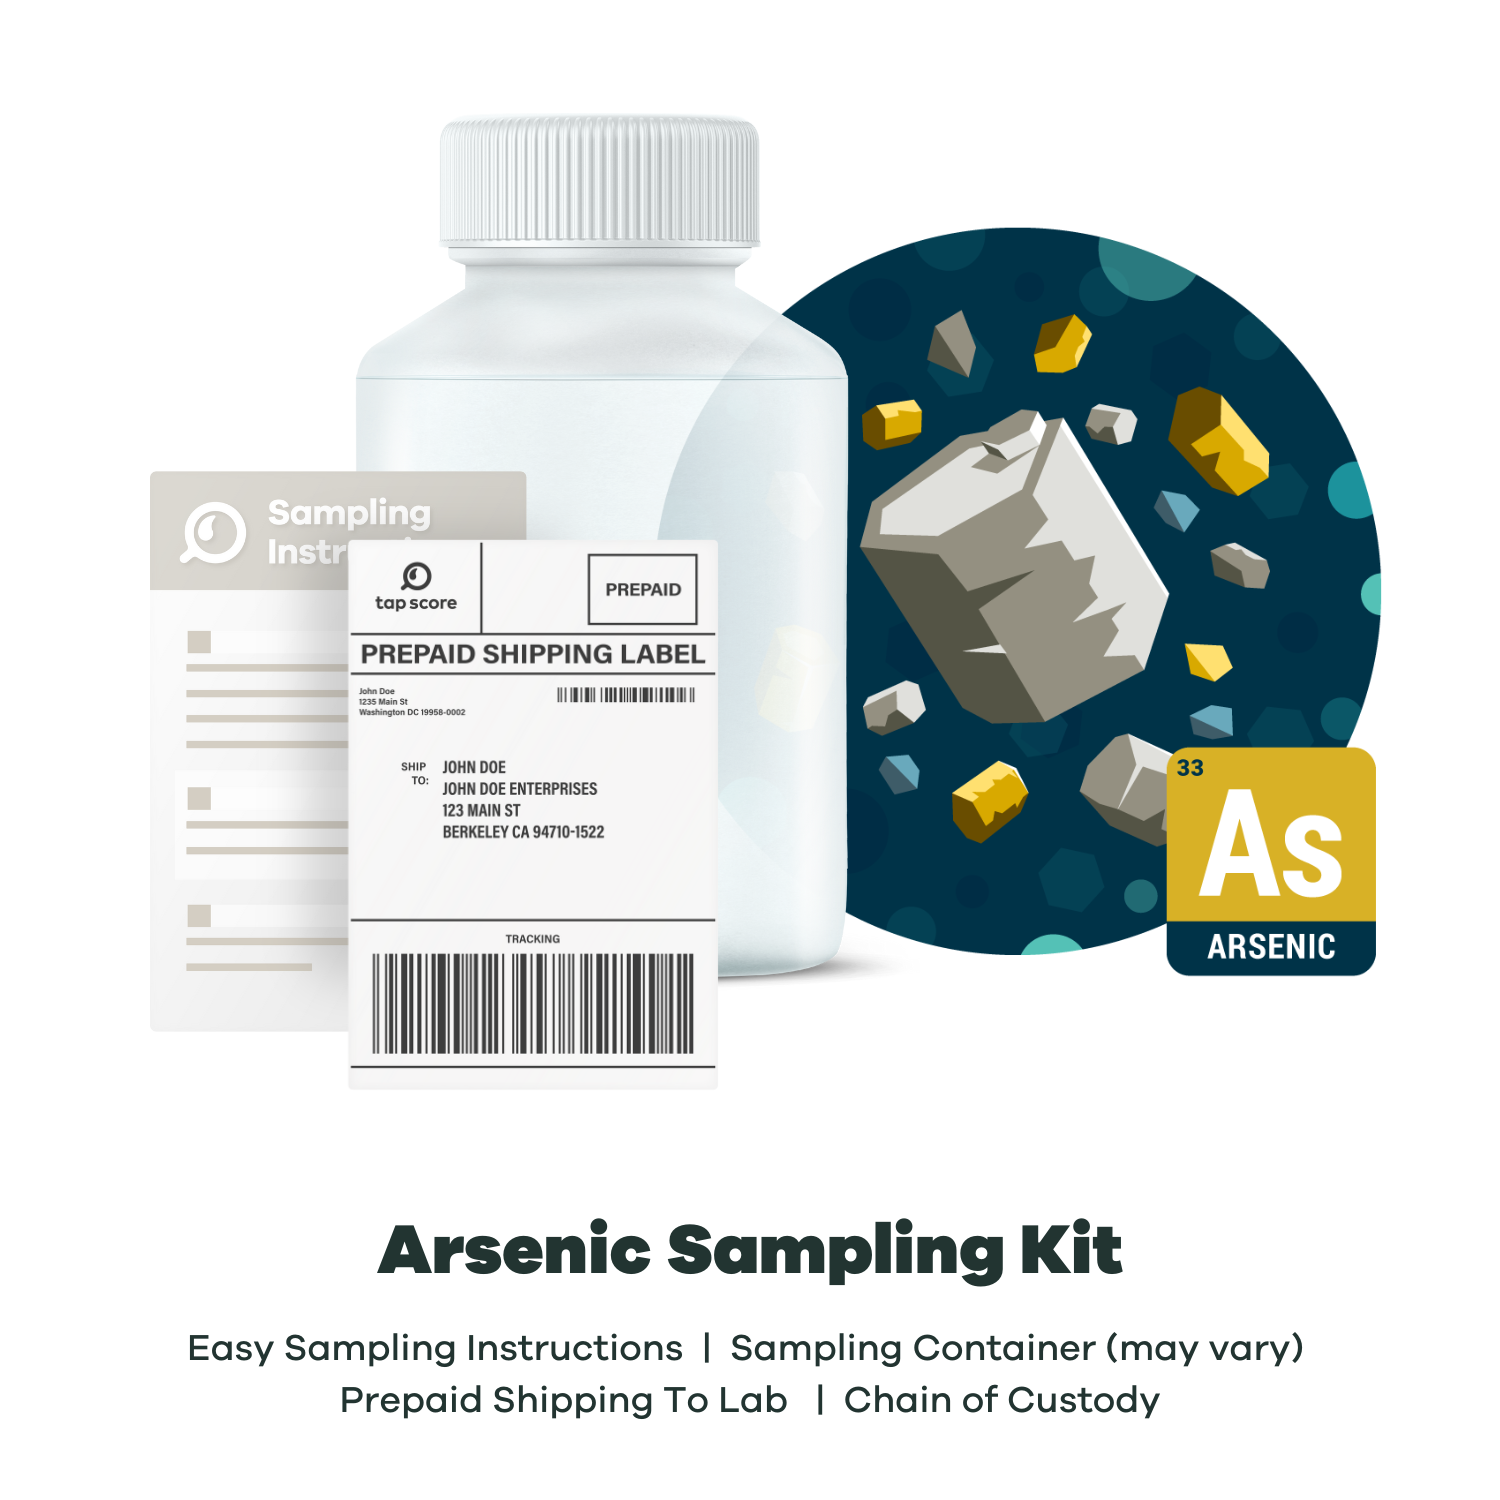 Total Arsenic Sampling Kit Contents Bottle